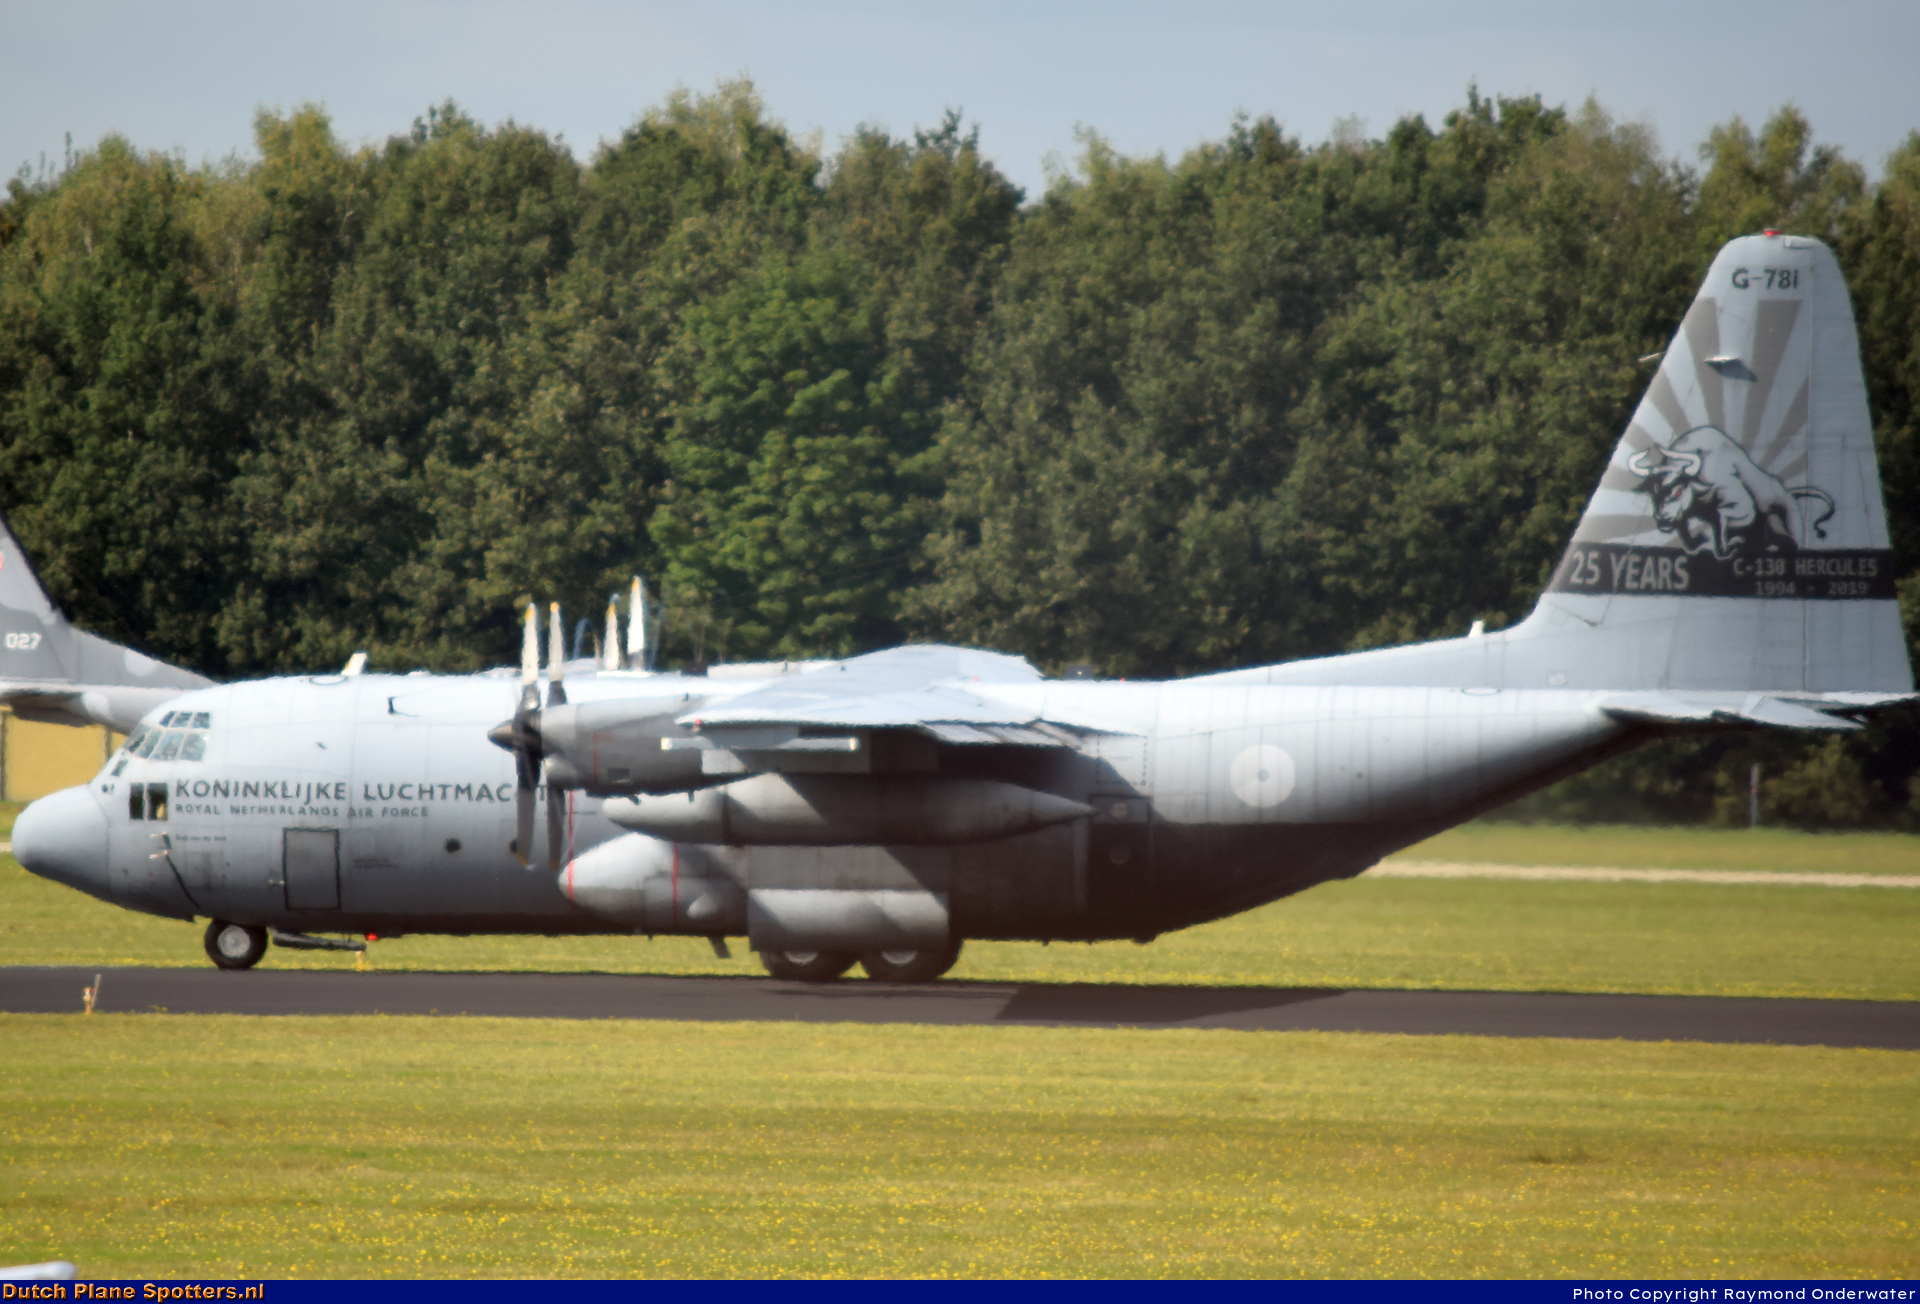 G-781 Lockheed C-130 Hercules MIL - Dutch Royal Air Force by Raymond Onderwater